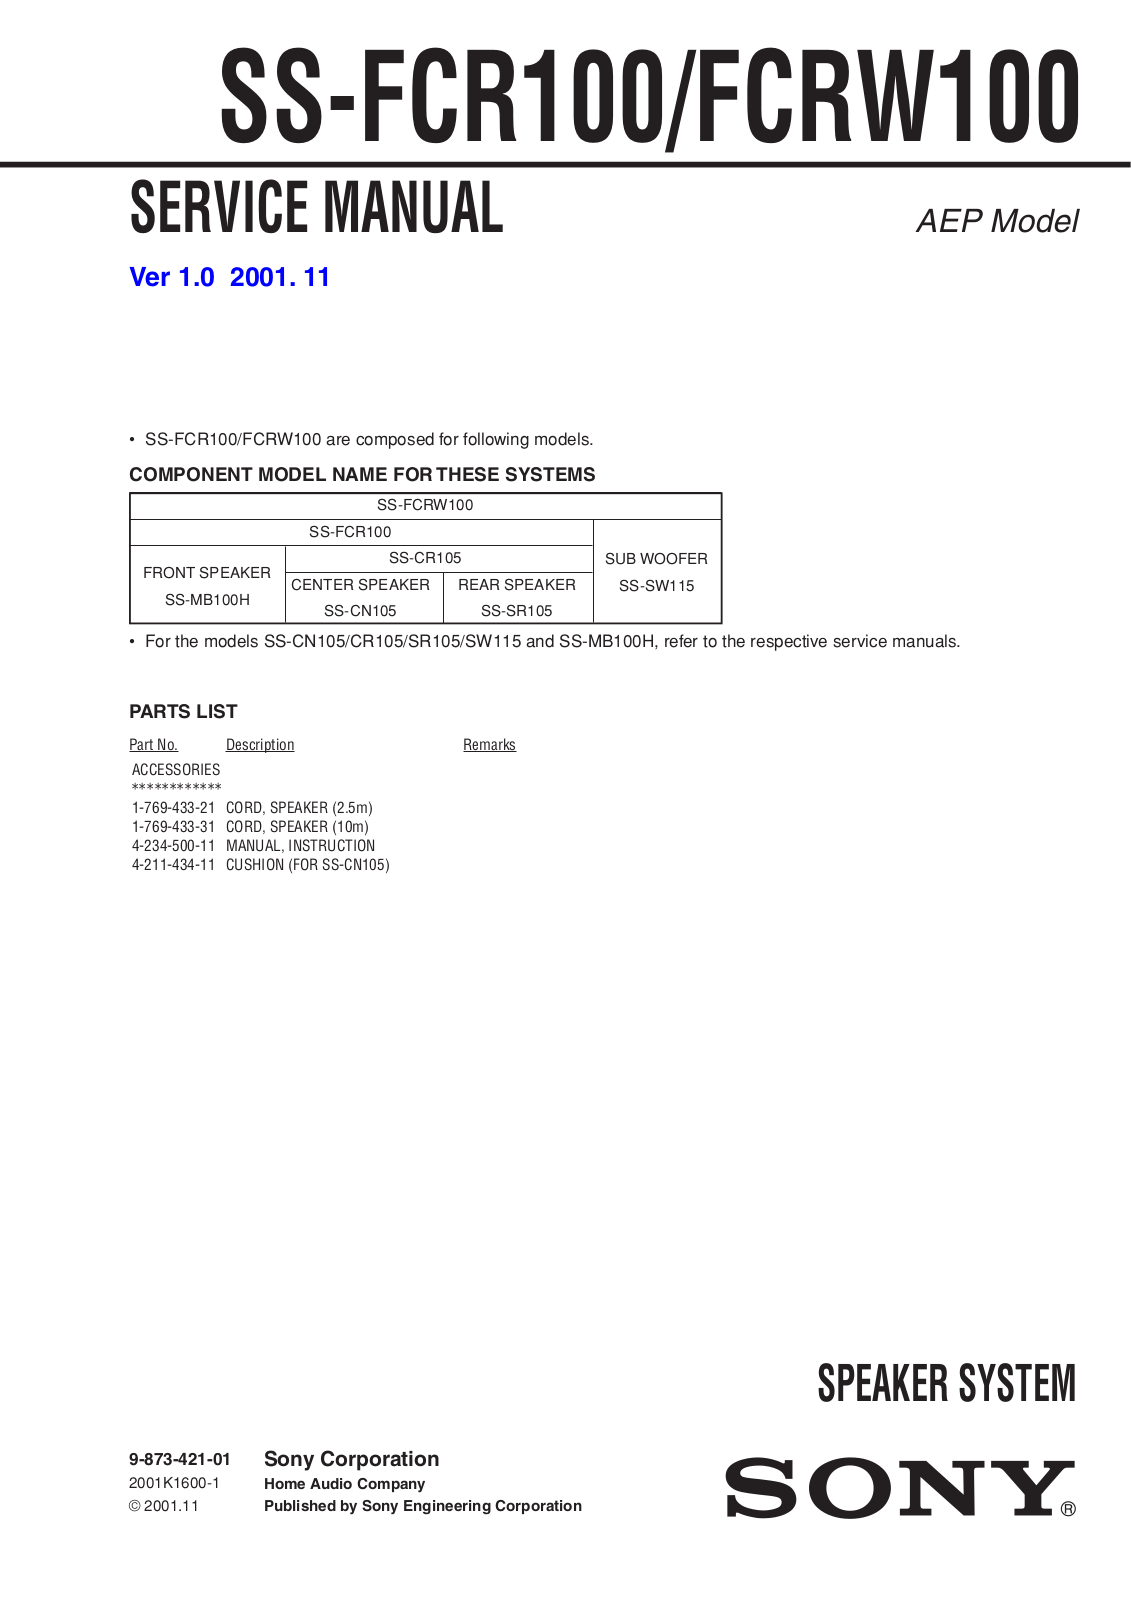 Sony FCRW100, SS-FCR100 Service Manual